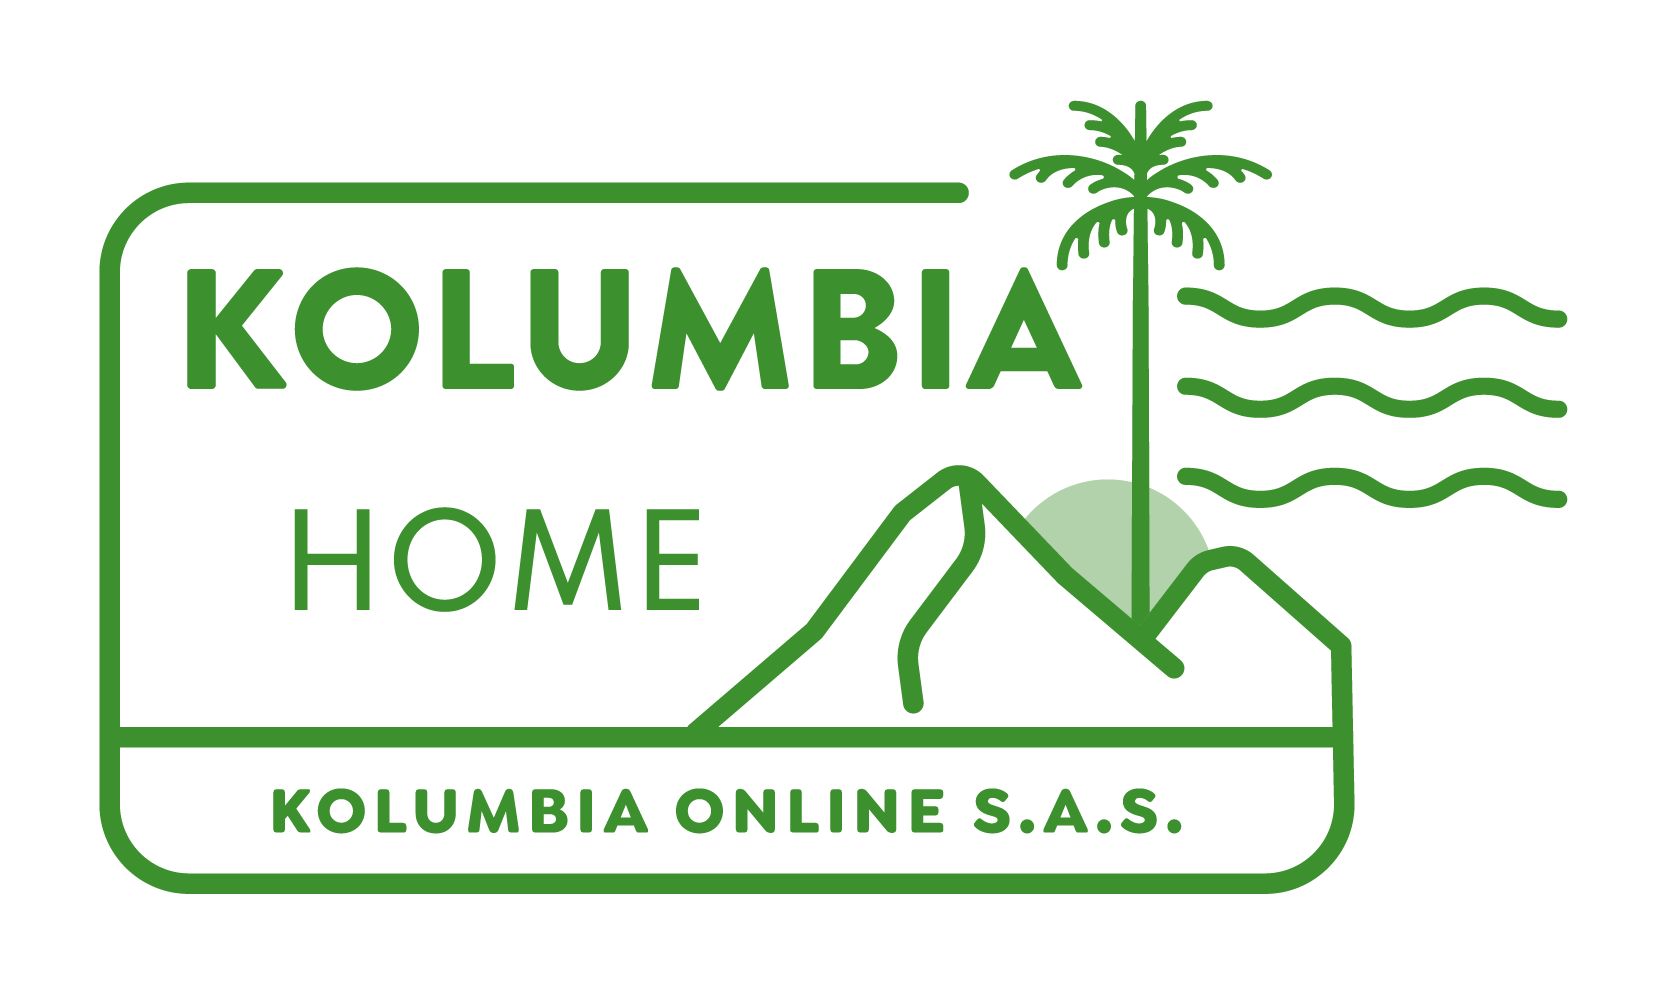 Kolumbia Online